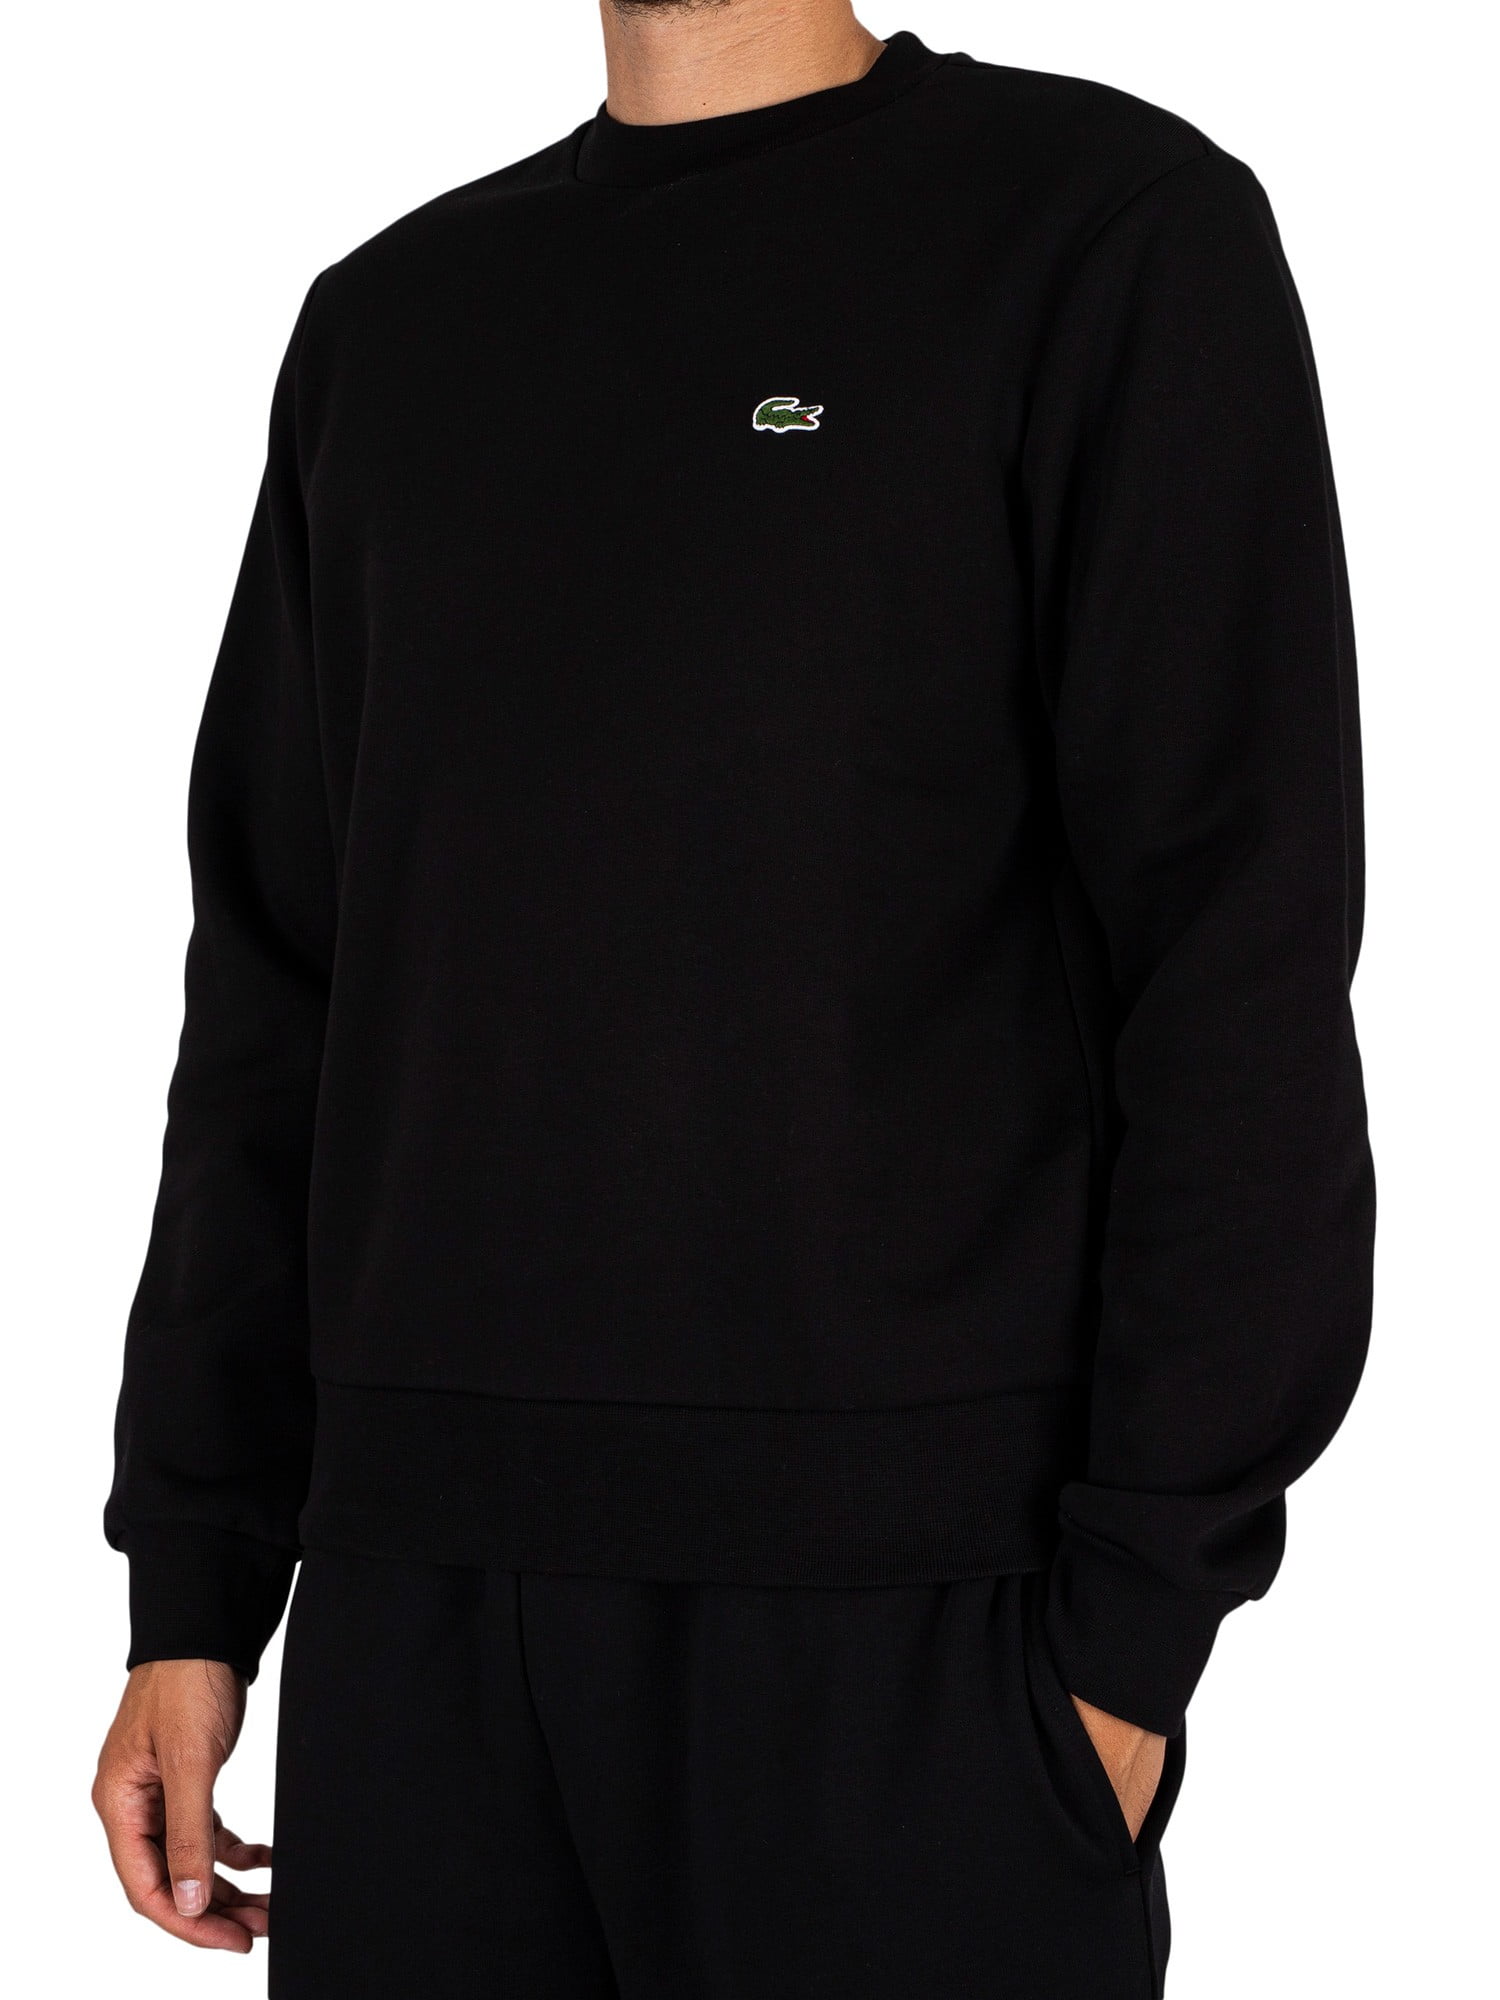 Black Sweatshirt, Logo Lacoste